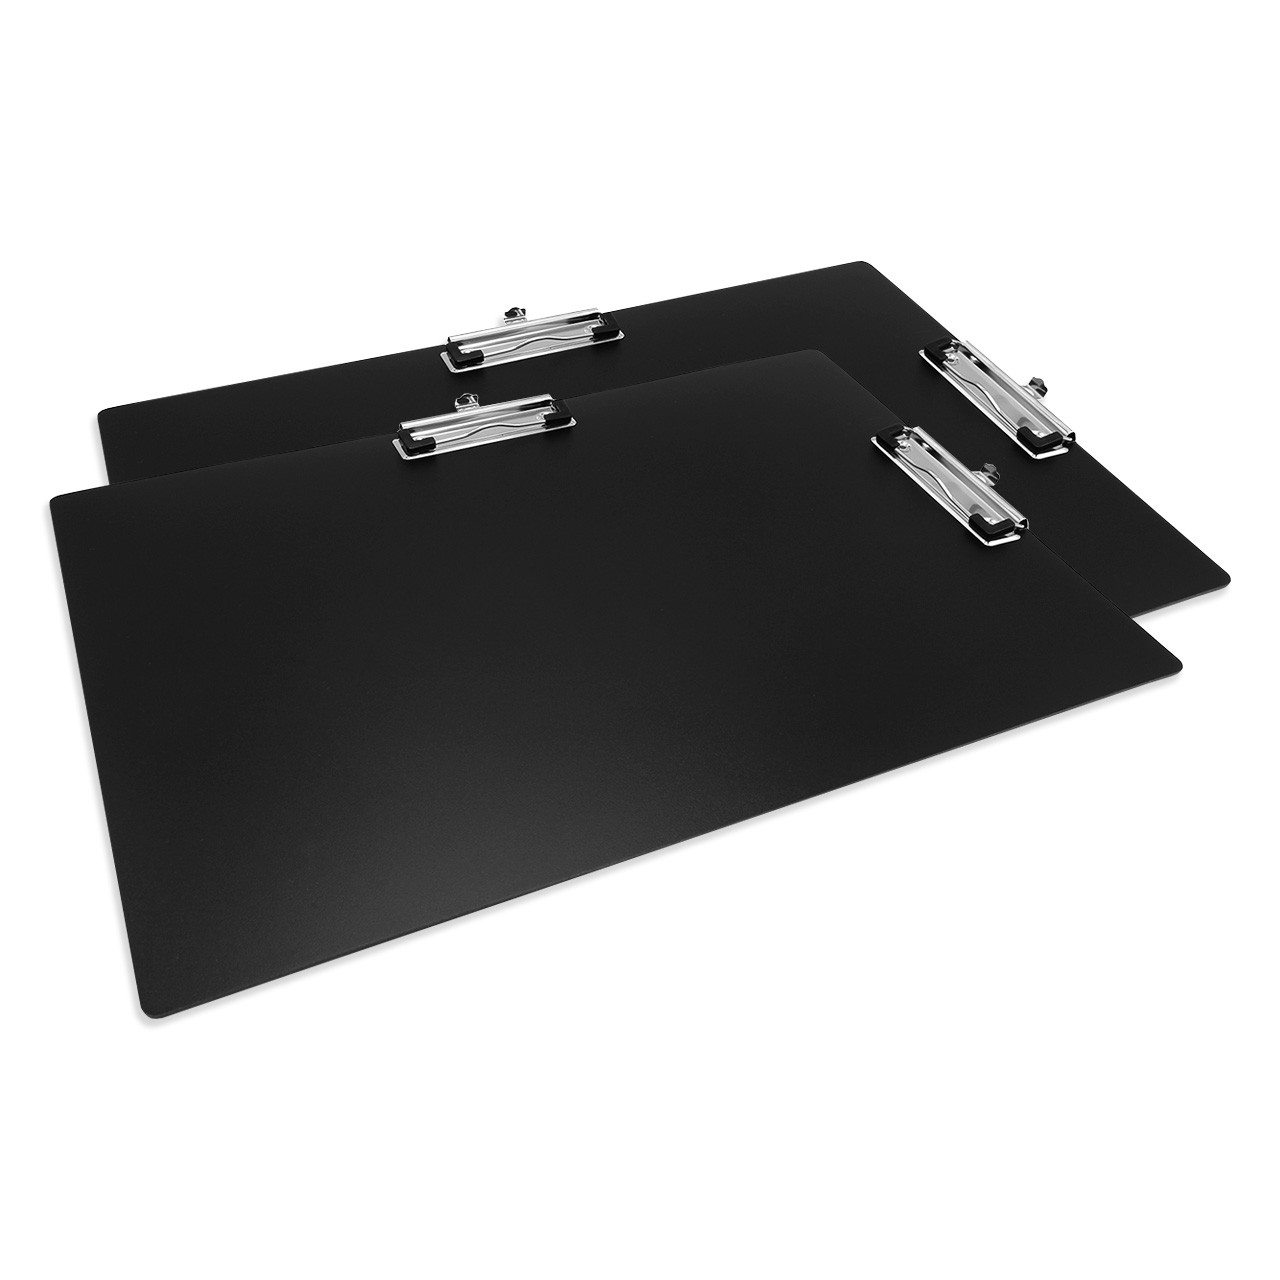 Clipboard Notepad - Ledger Large